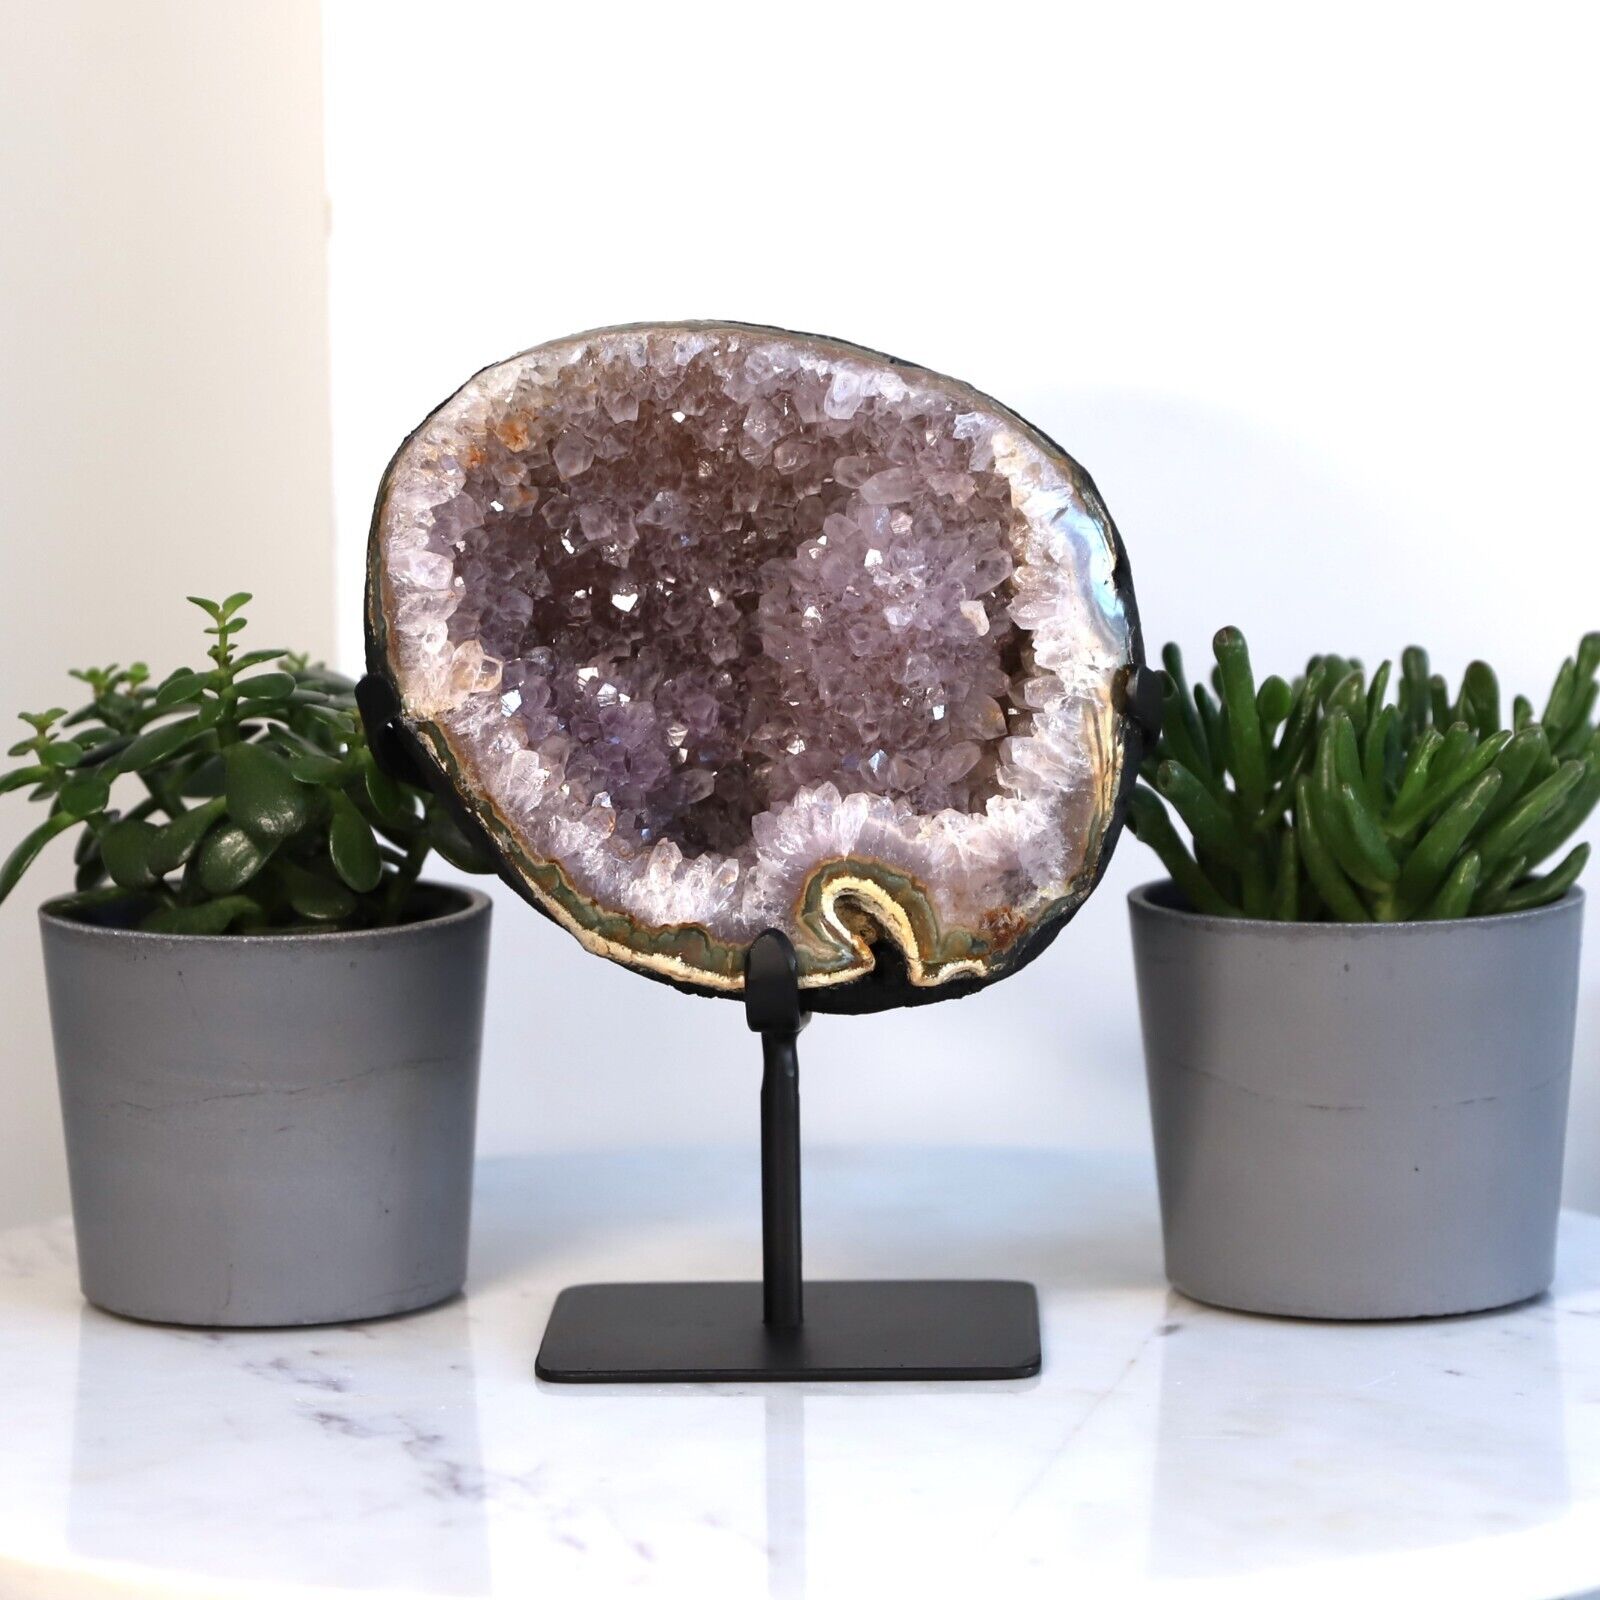 Striking Pink Amethyst Crystal Geode with flower feature 3.85kg